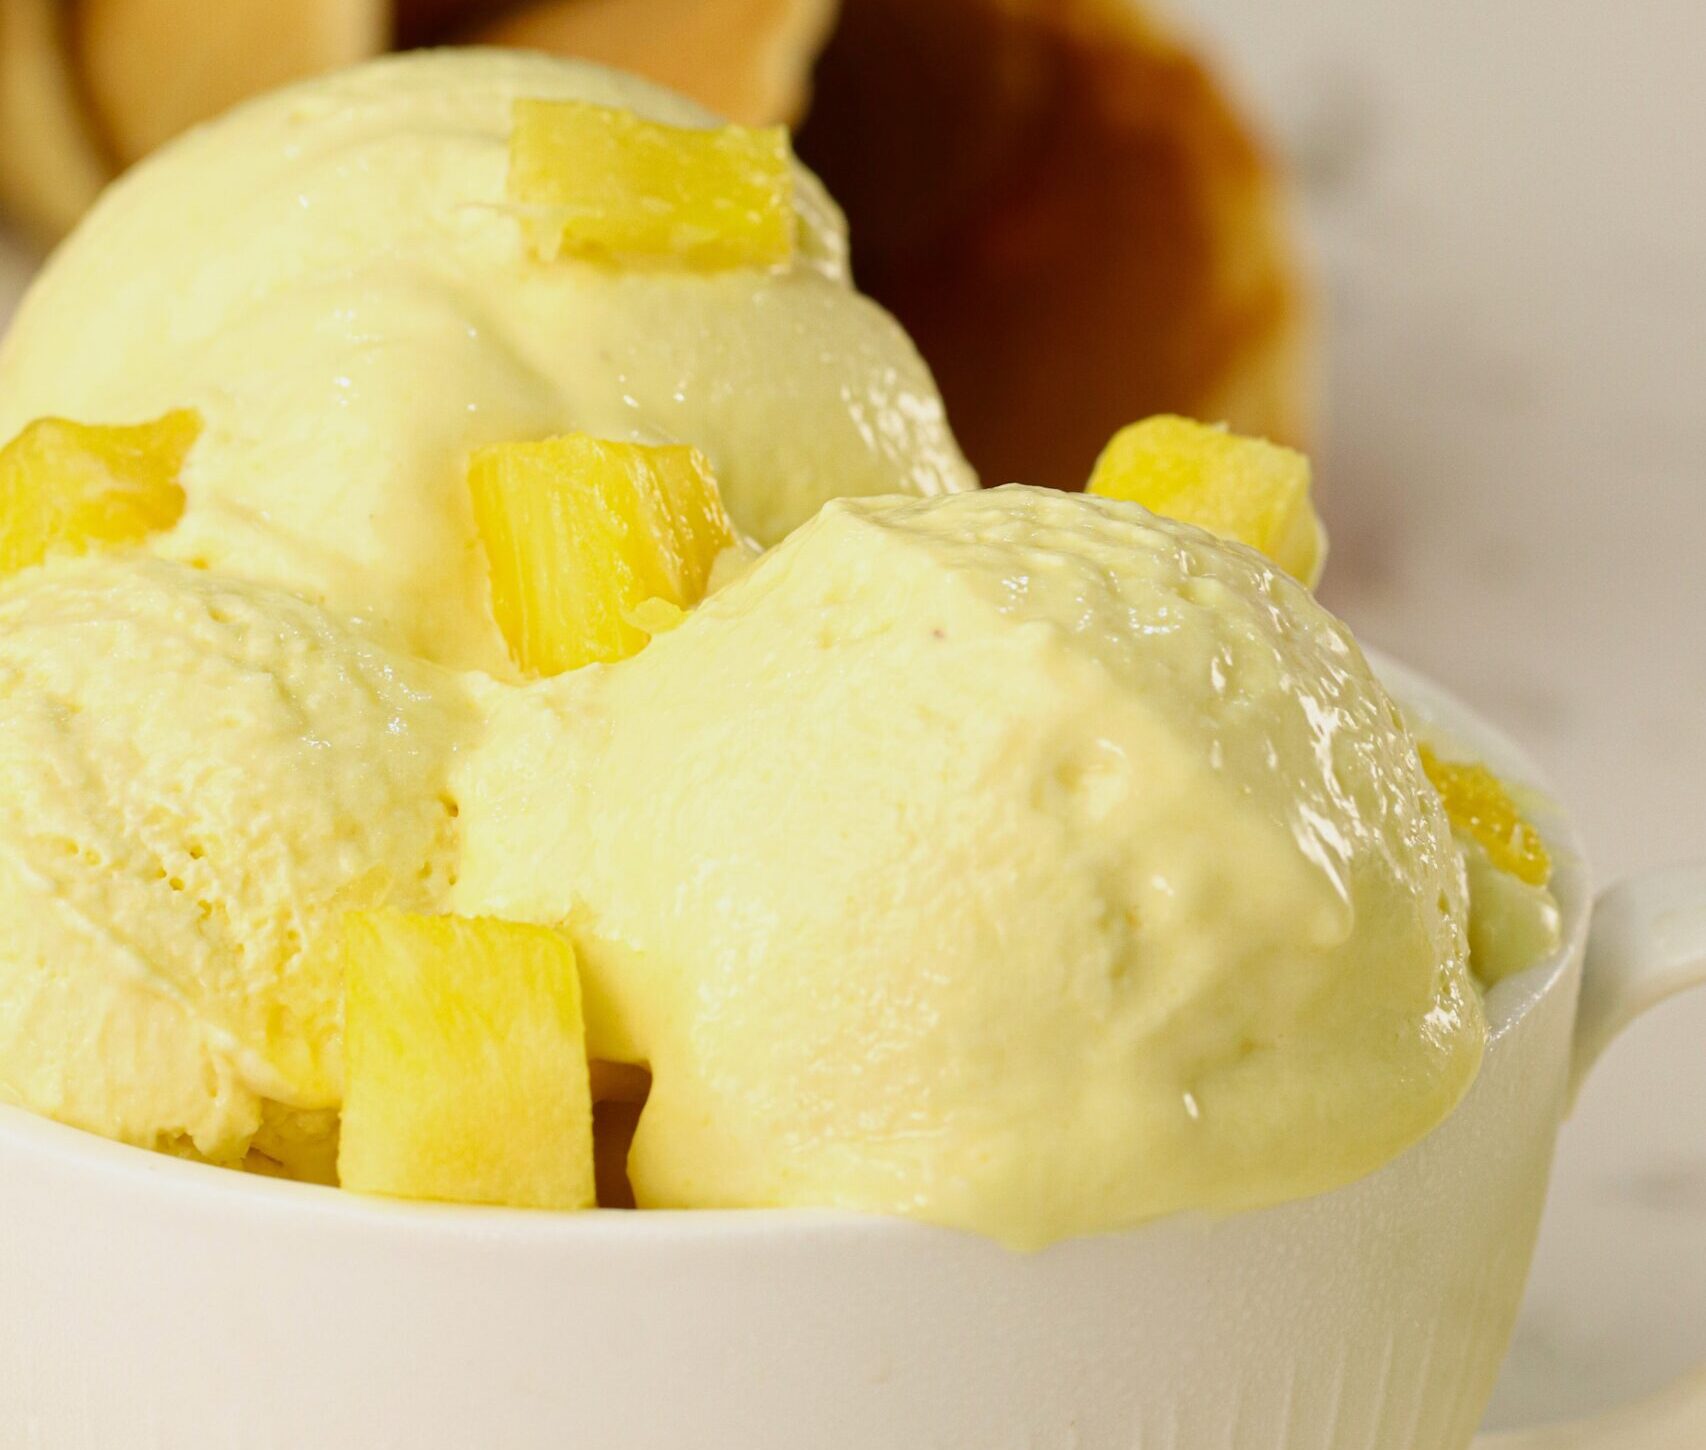 Enjoying a bowl of homemade pineapple ice cream, no ice cream maker involved